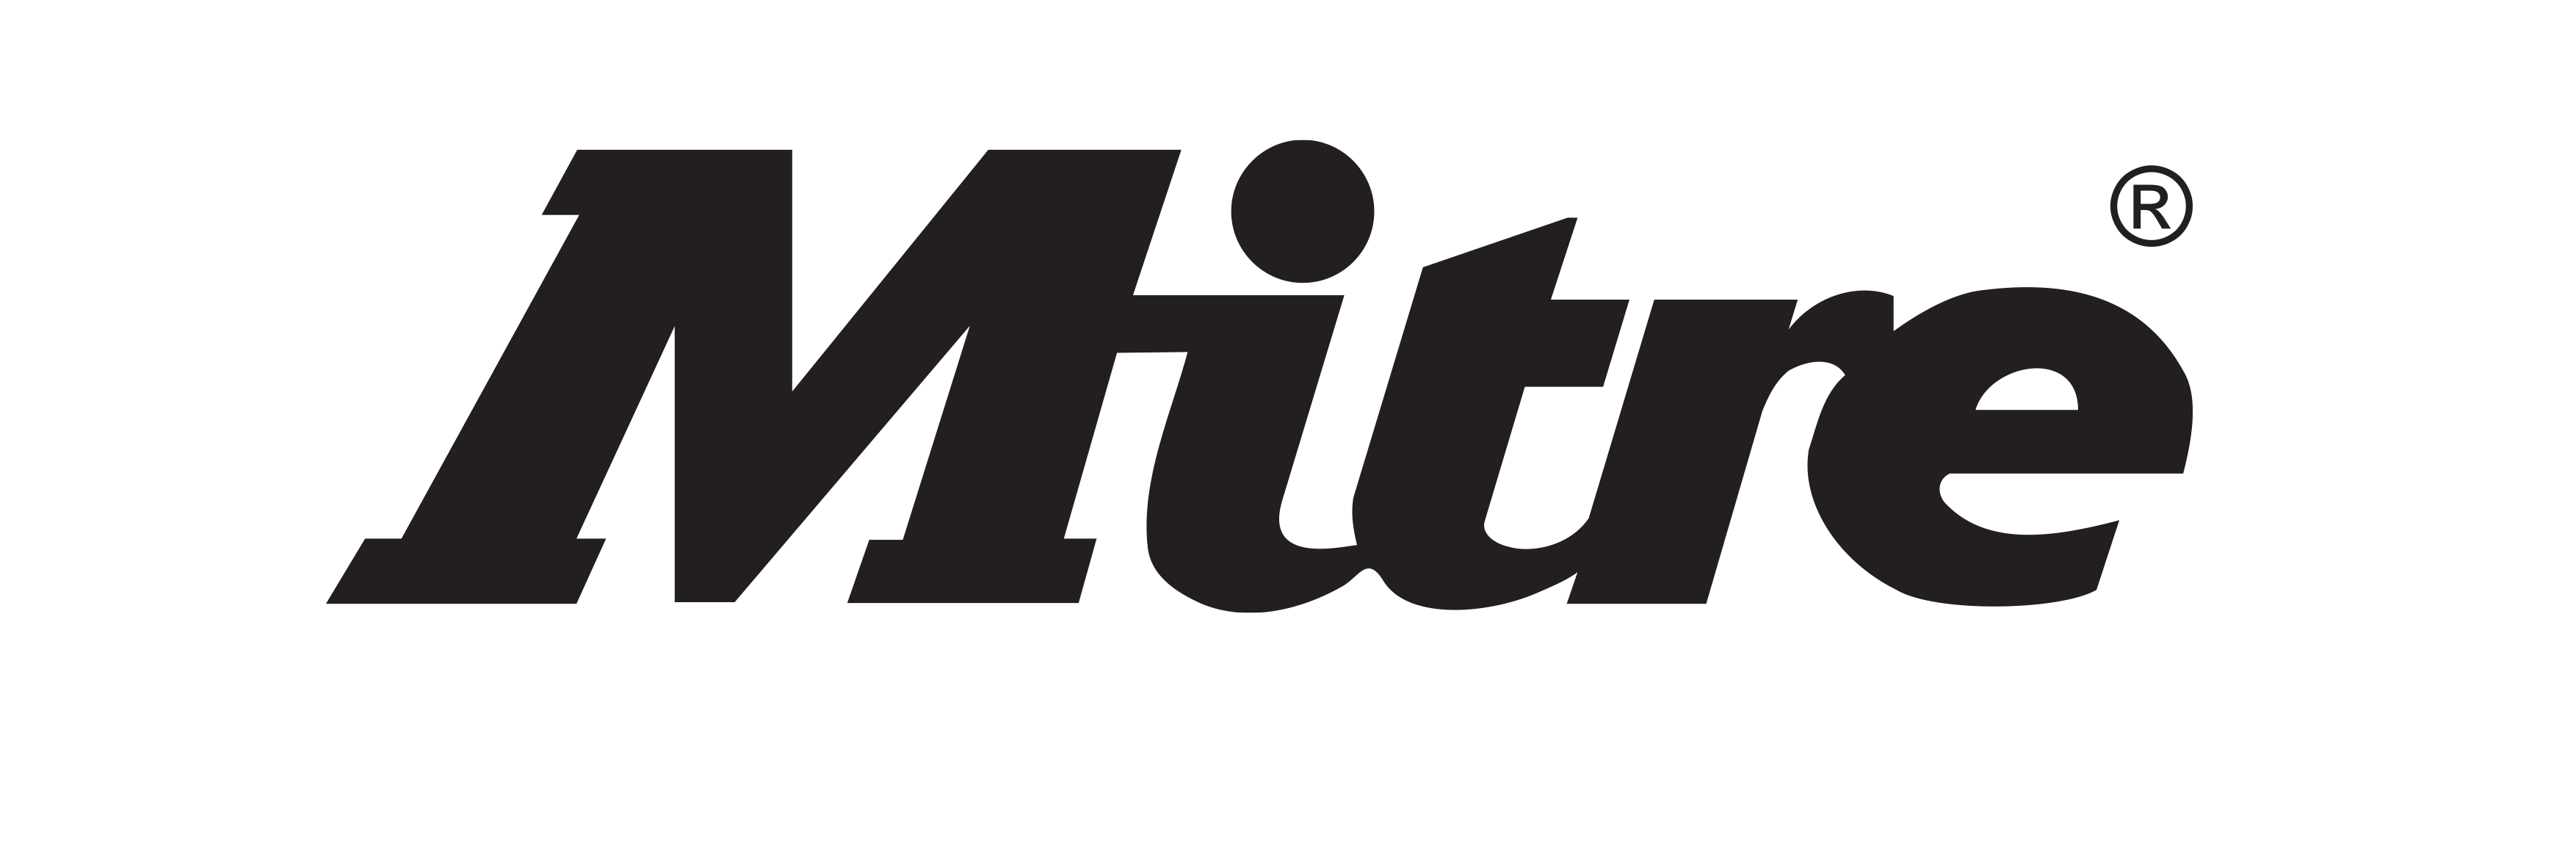 mitre_heritage_logo_black